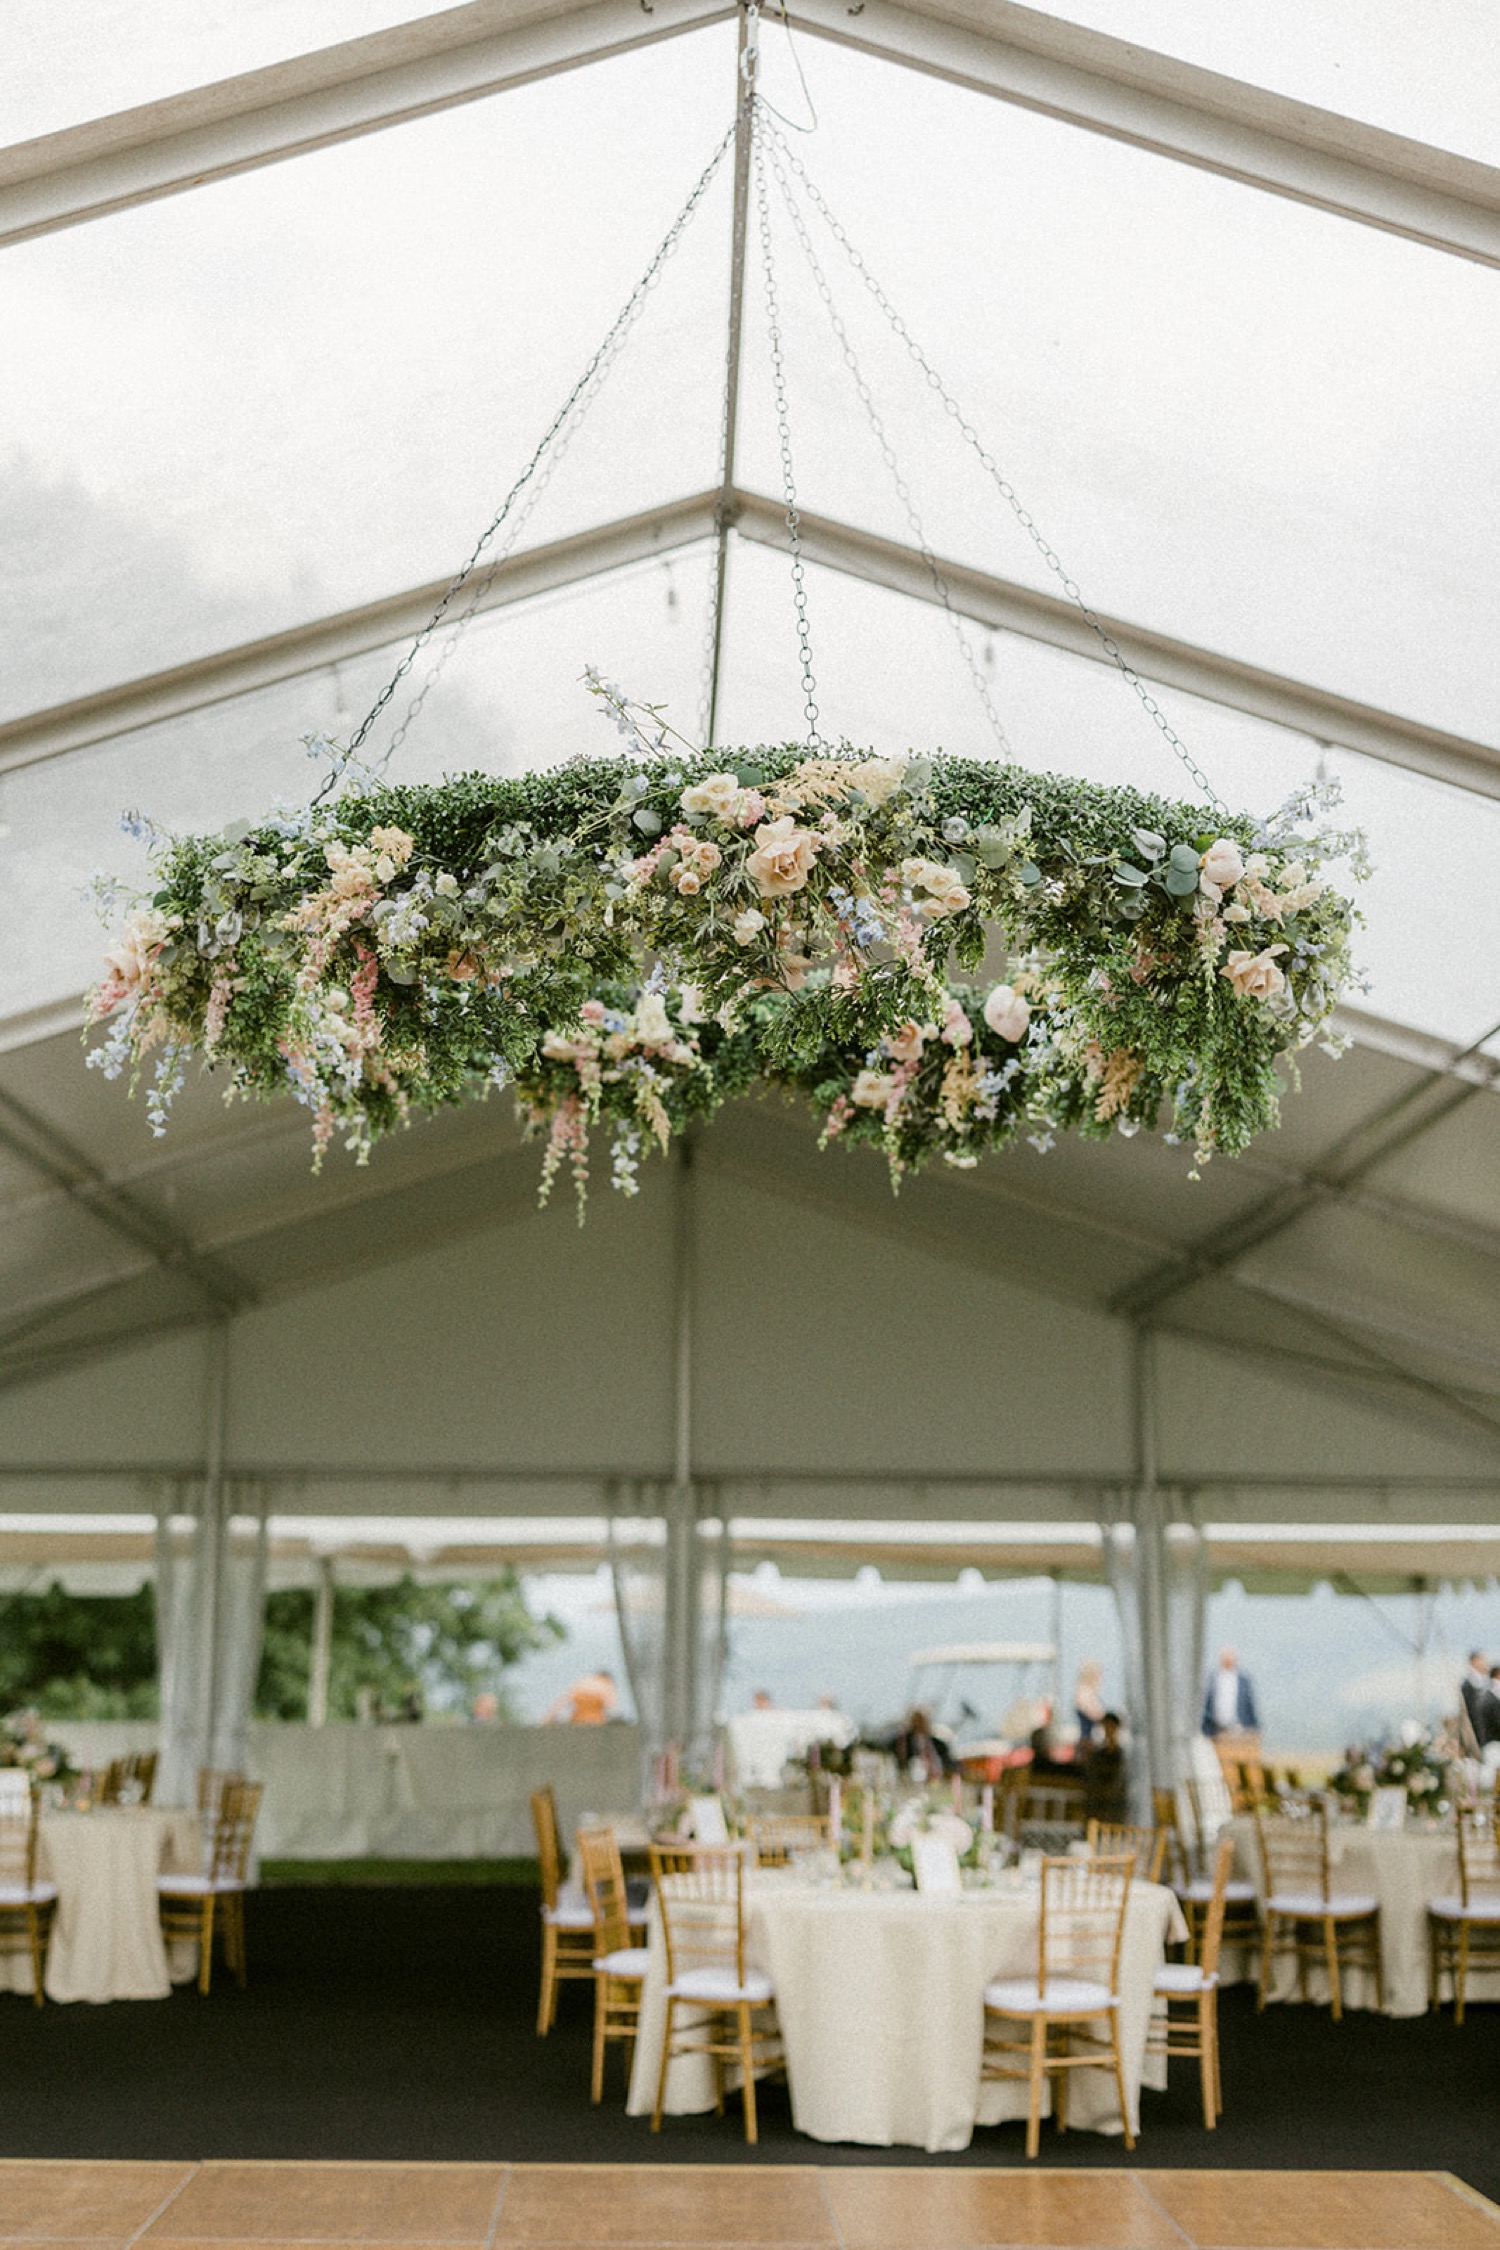 wreath in tent wedding reception